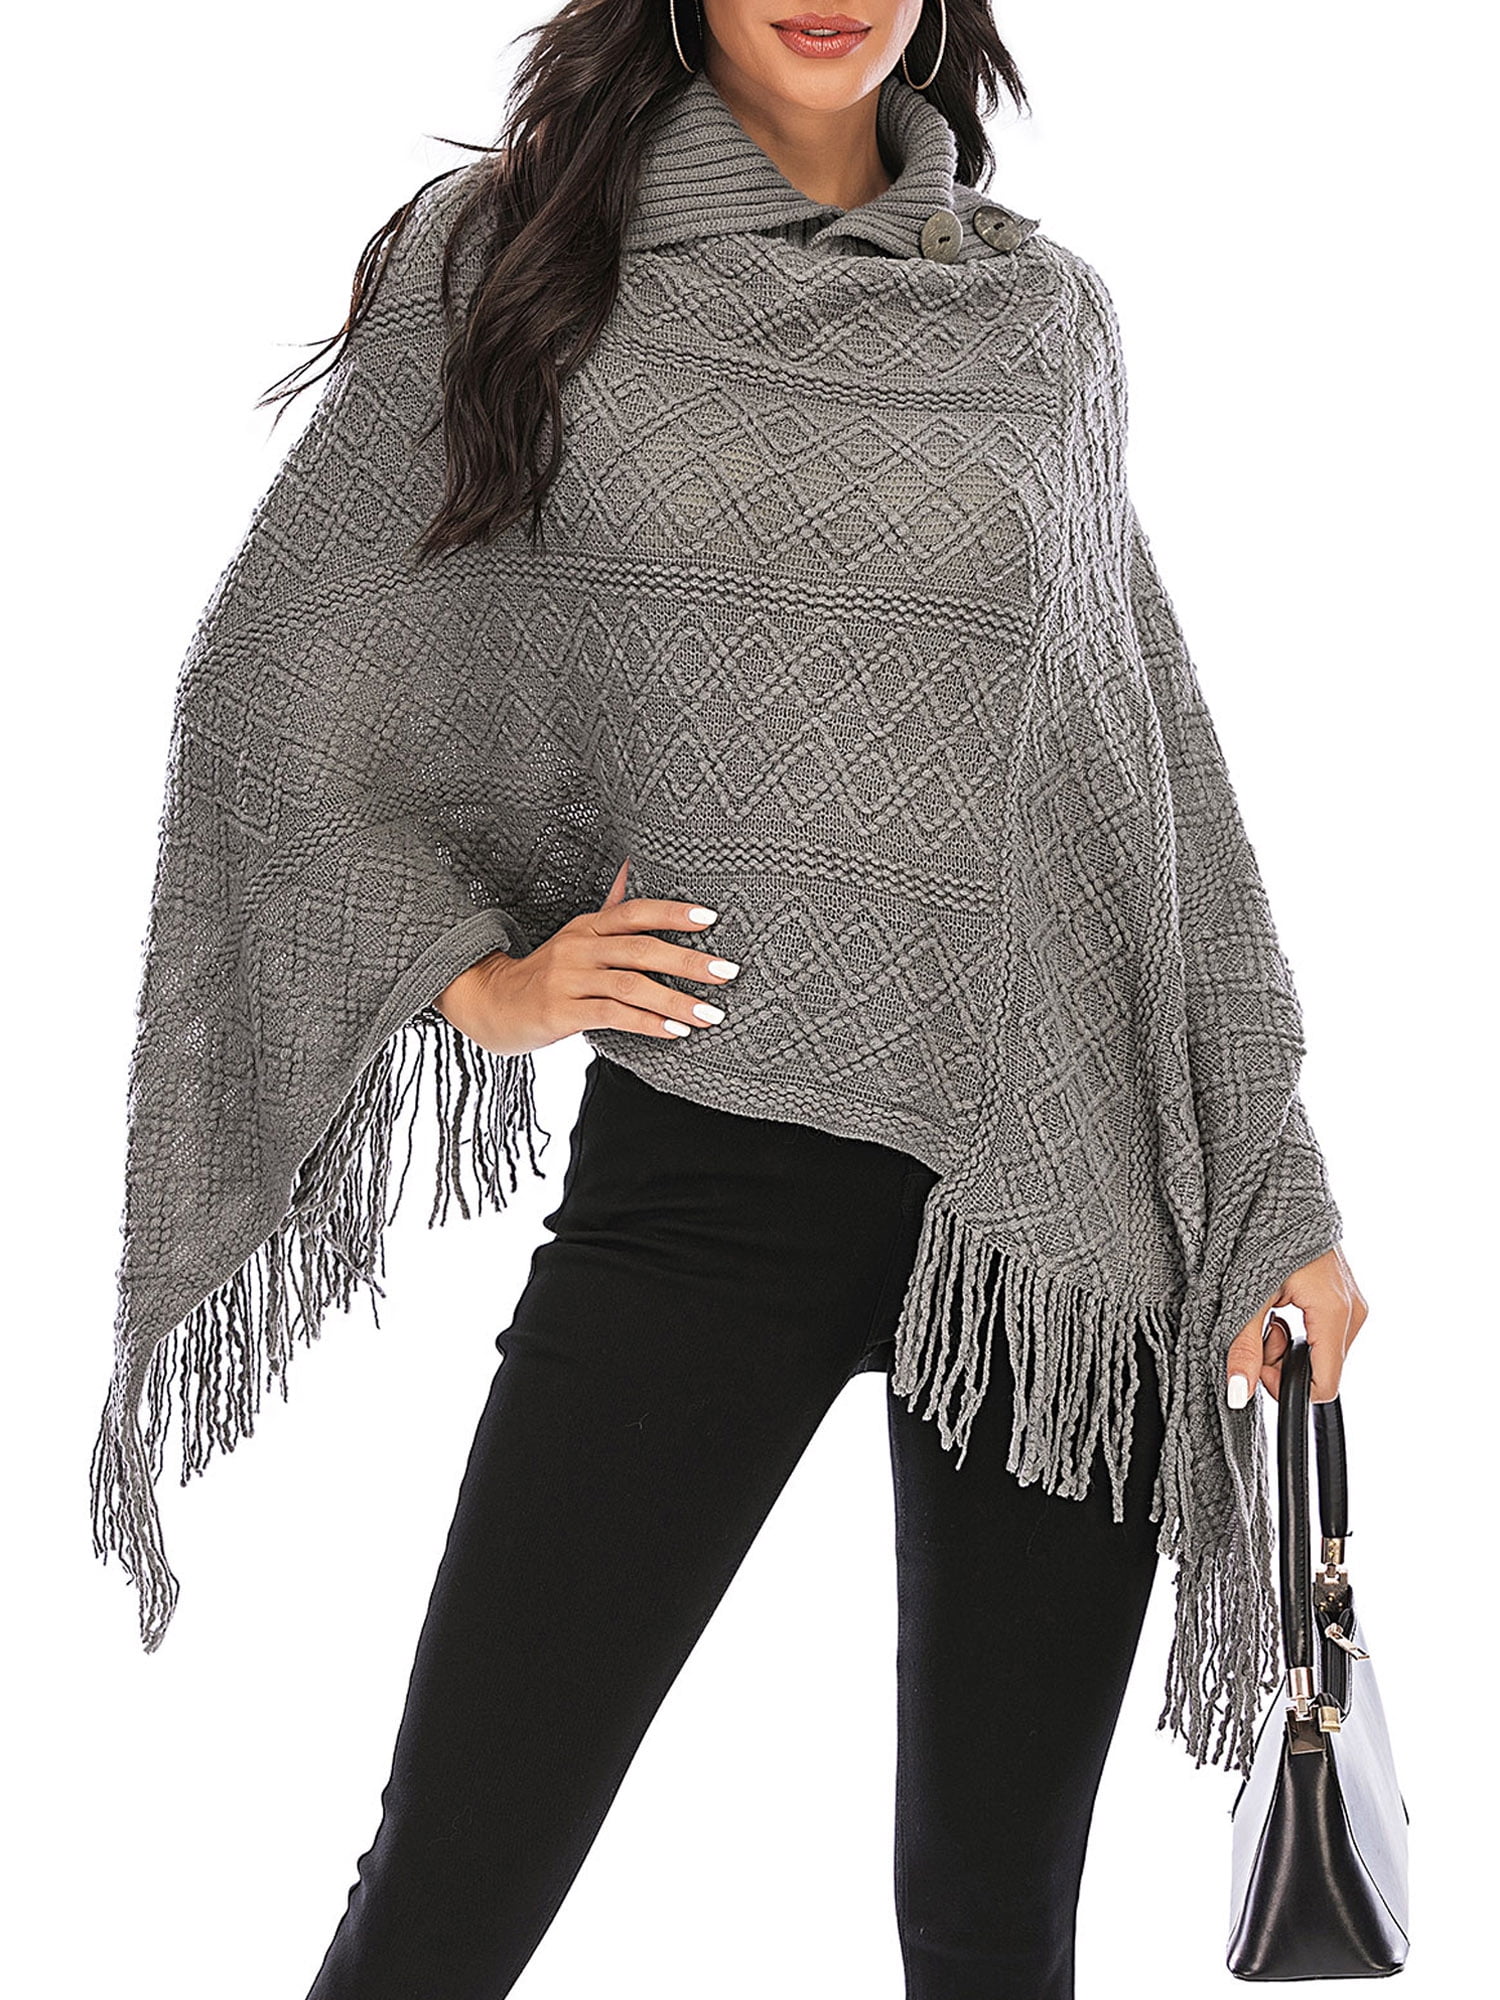 MARINA LUNA Ladies 1005 Wool Poncho Cape Wrap Sweater Hoodie Size ...